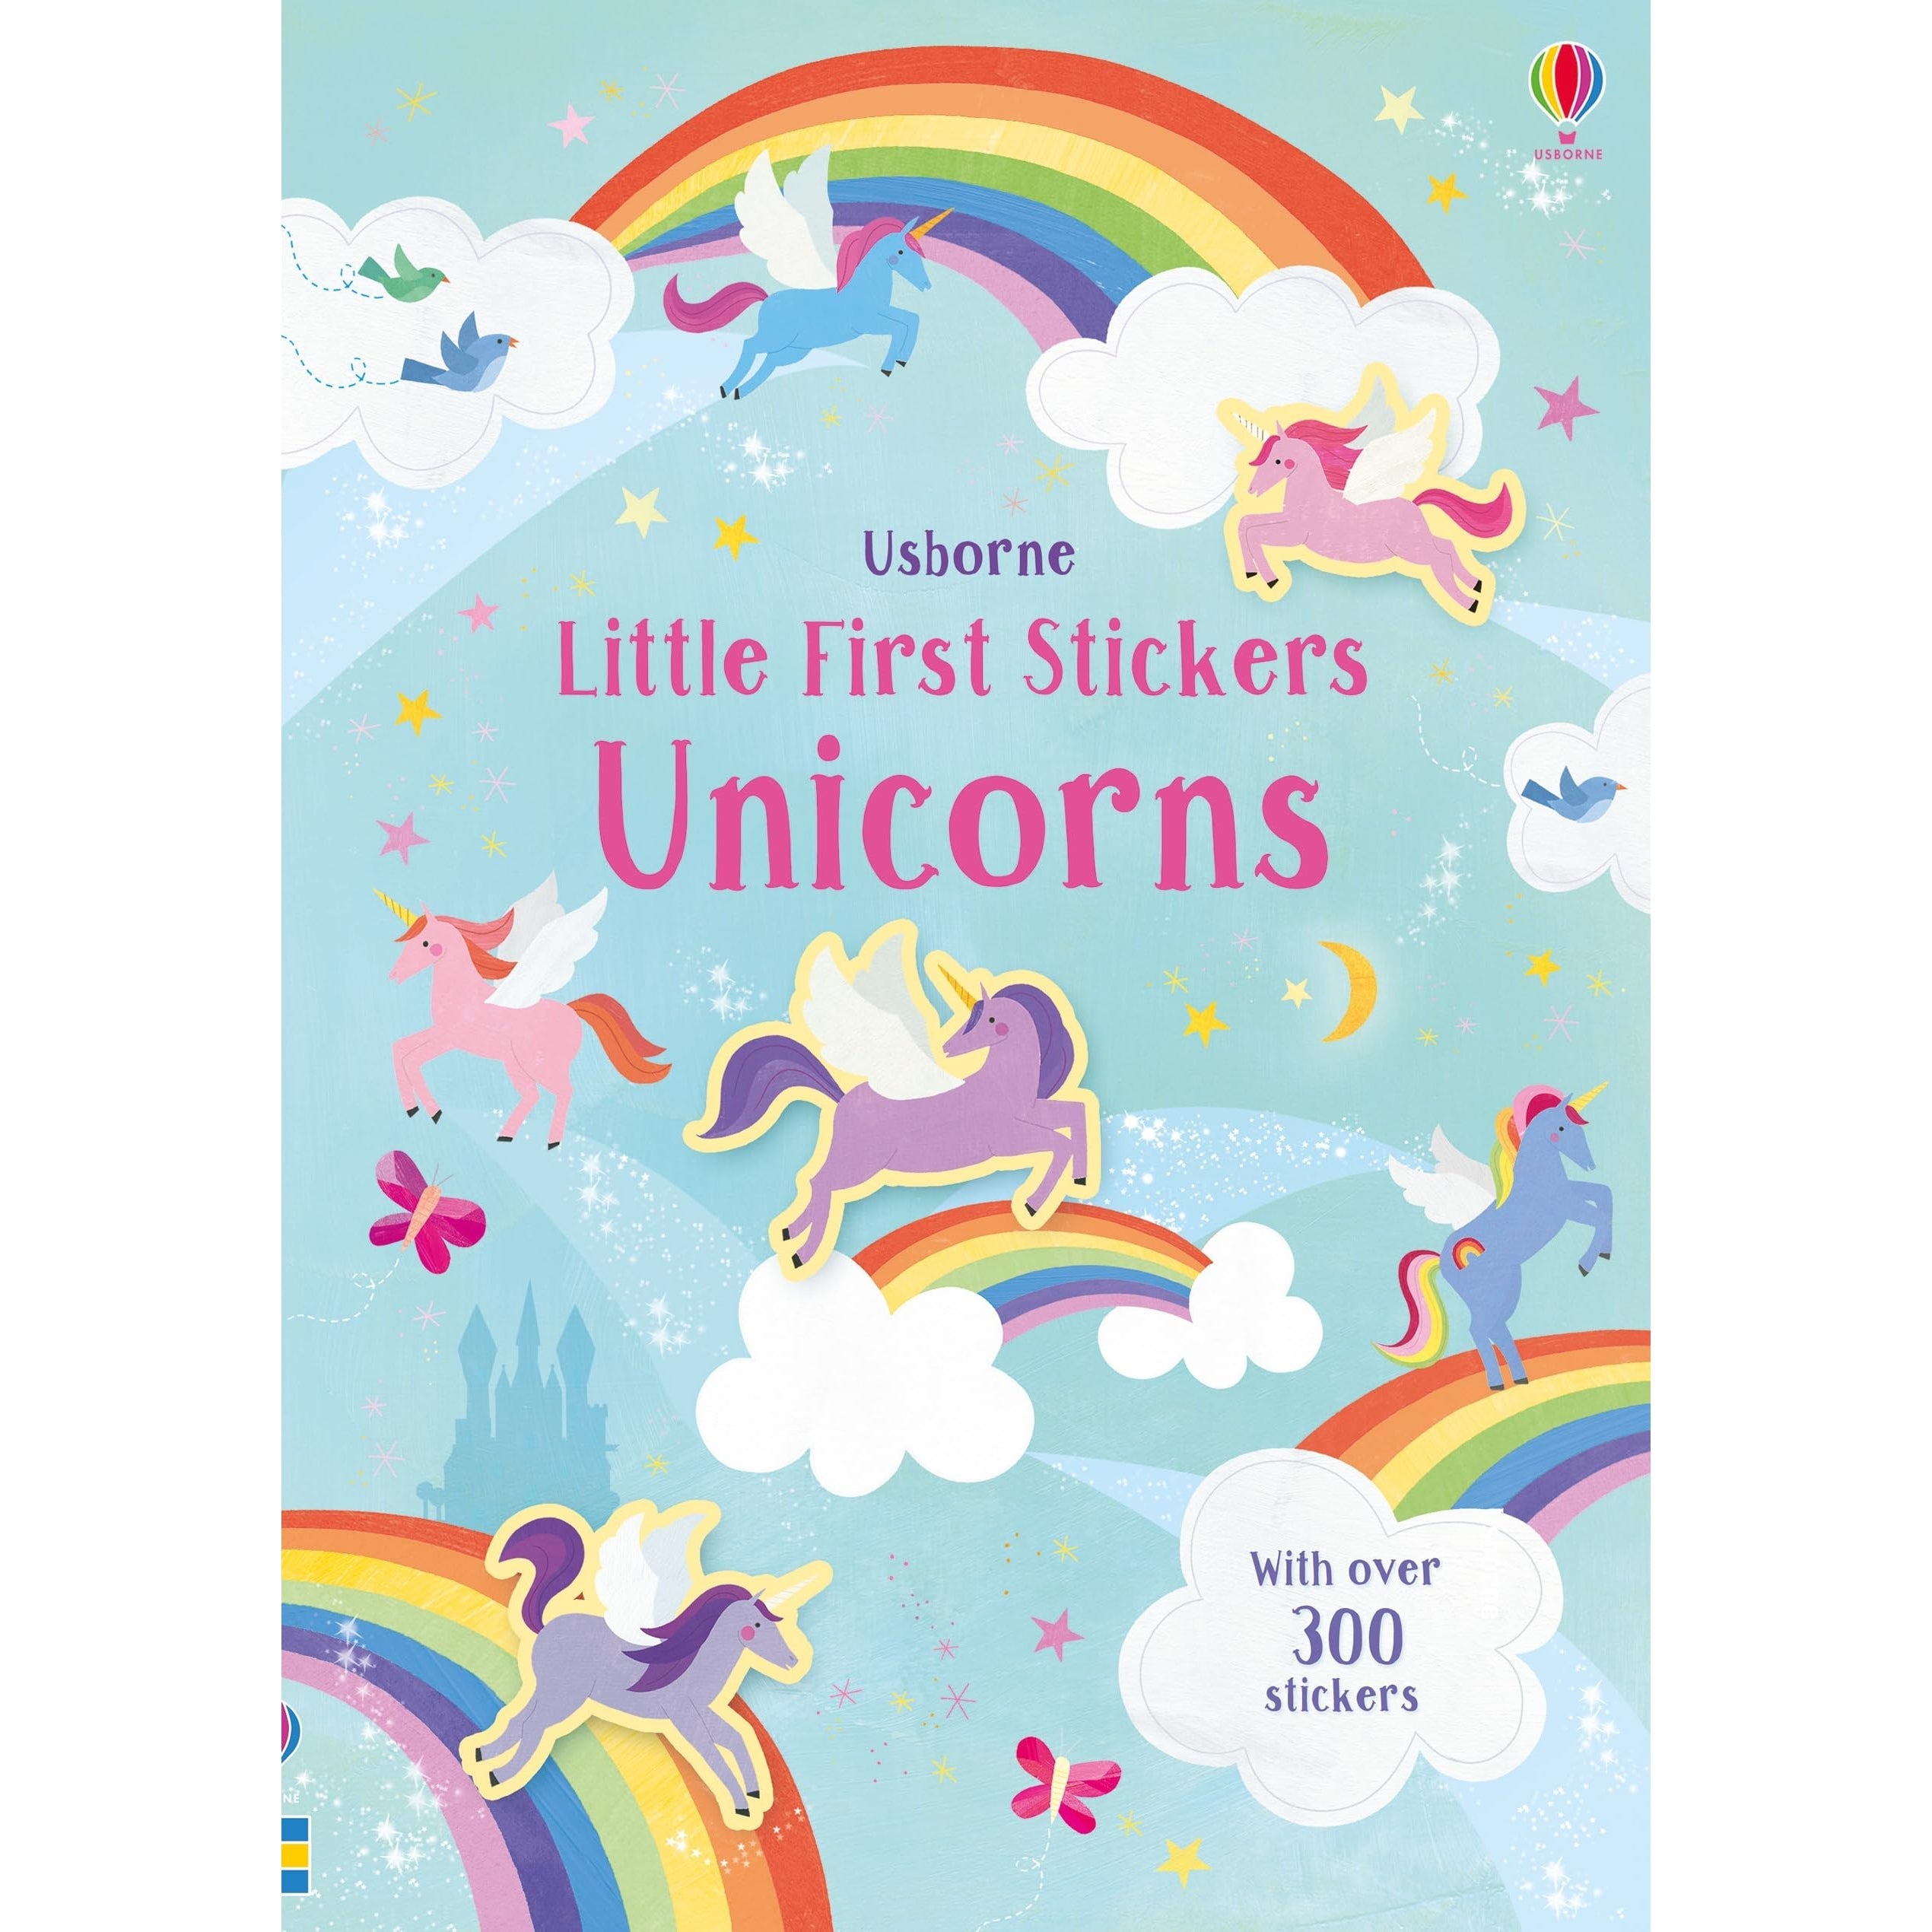 Make Believe Ideas: Big Stickers for Little Hands - Unicorns, Mermaids